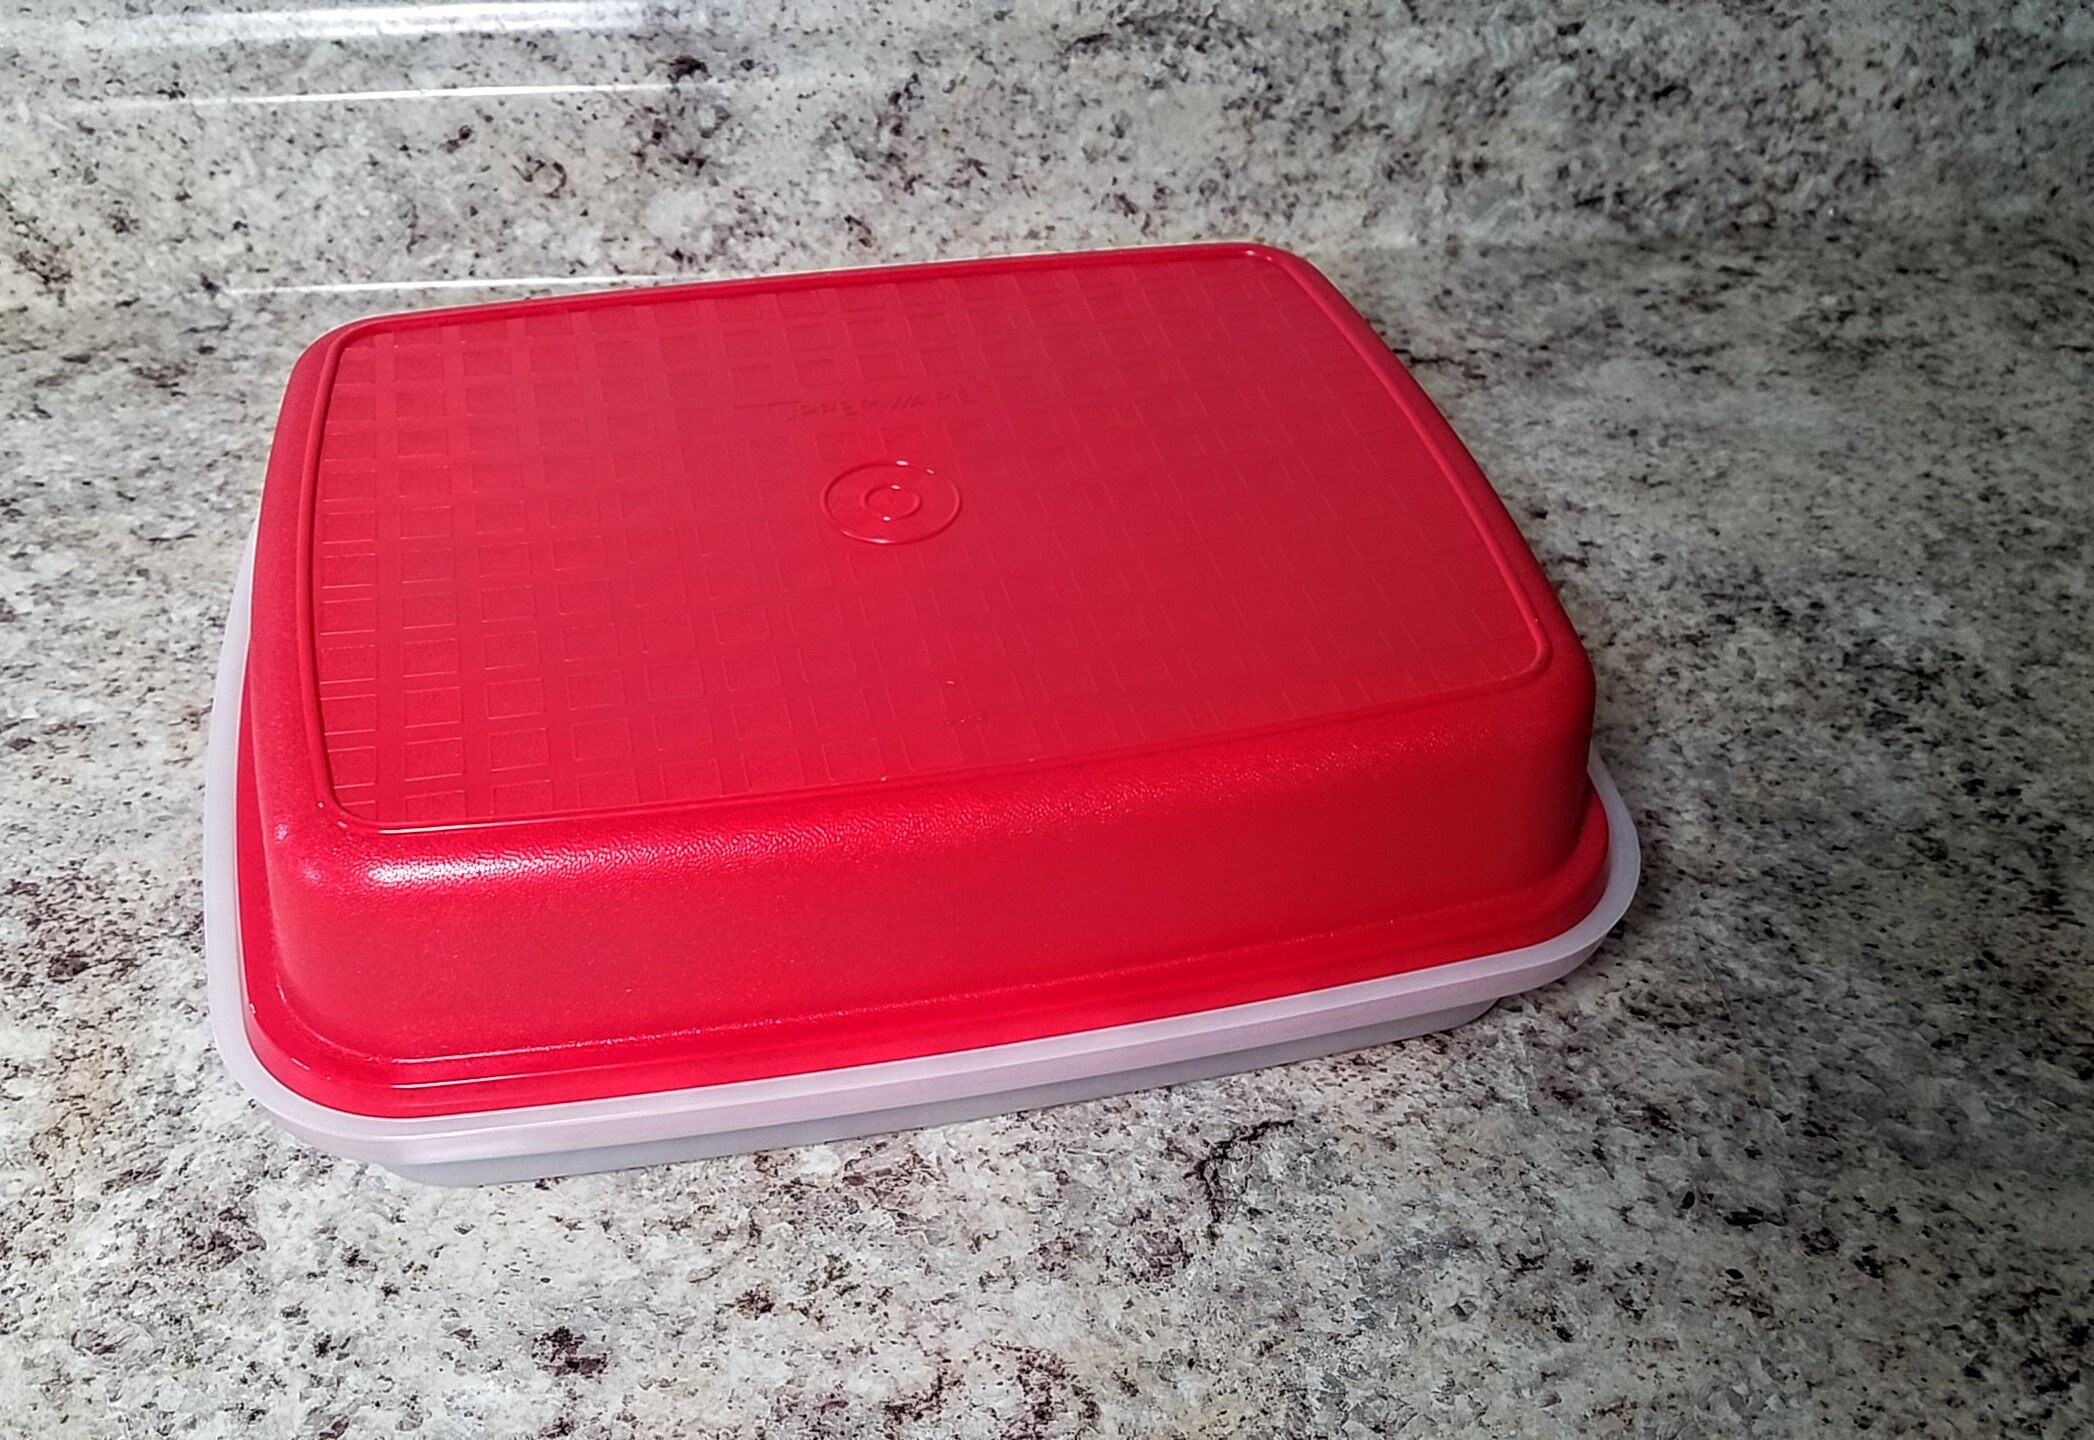  Tupperware Jr. Season Serve Red: Kitchen Products